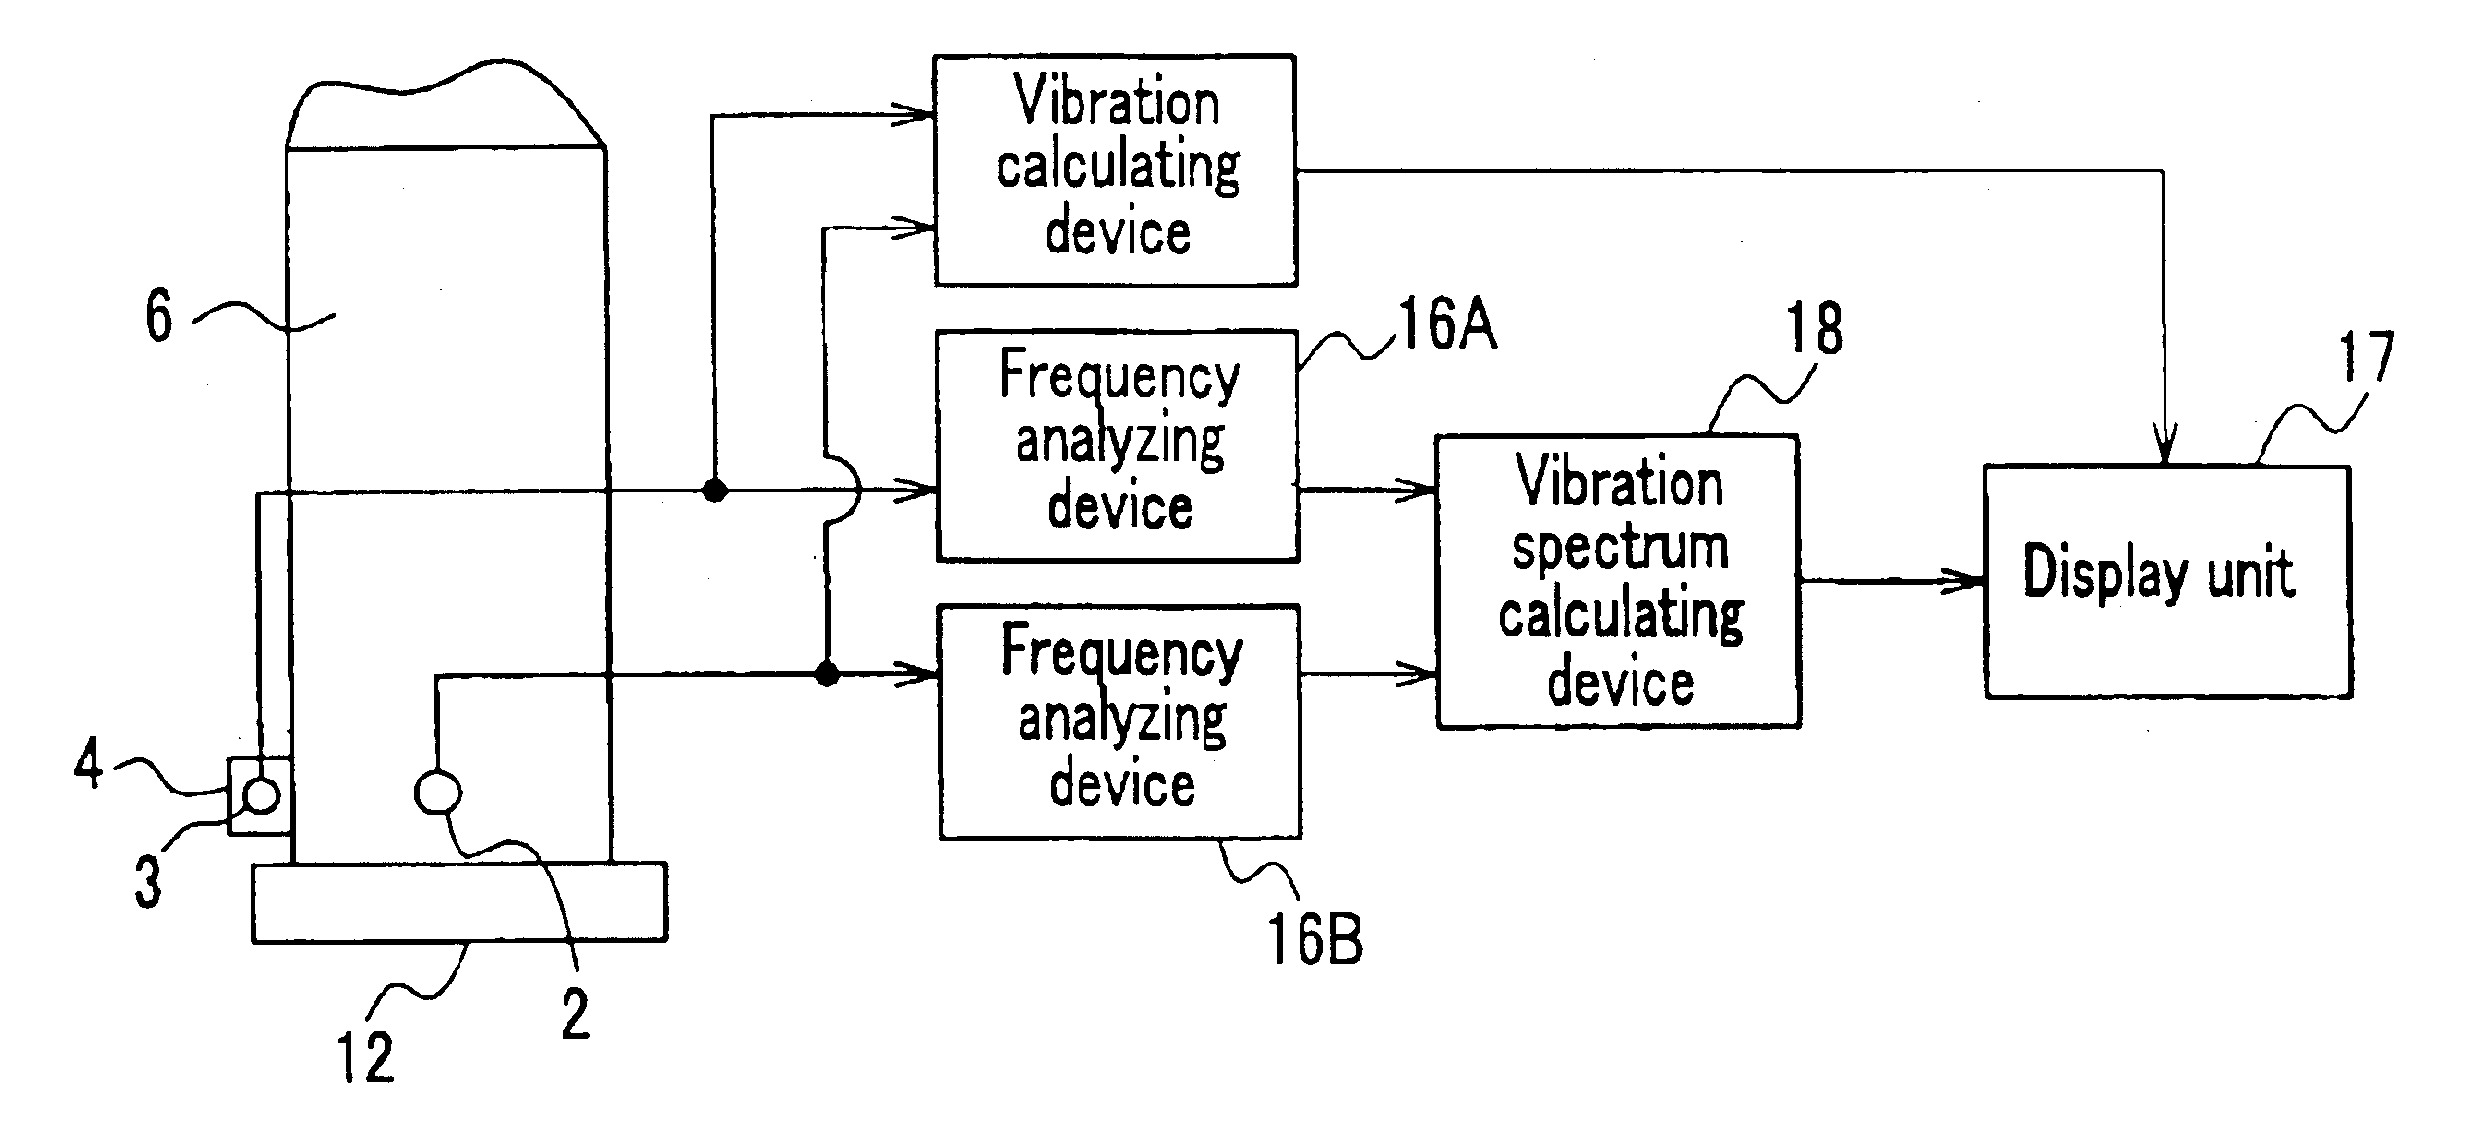 Measurement system of torsion vibration for reactor internal pump